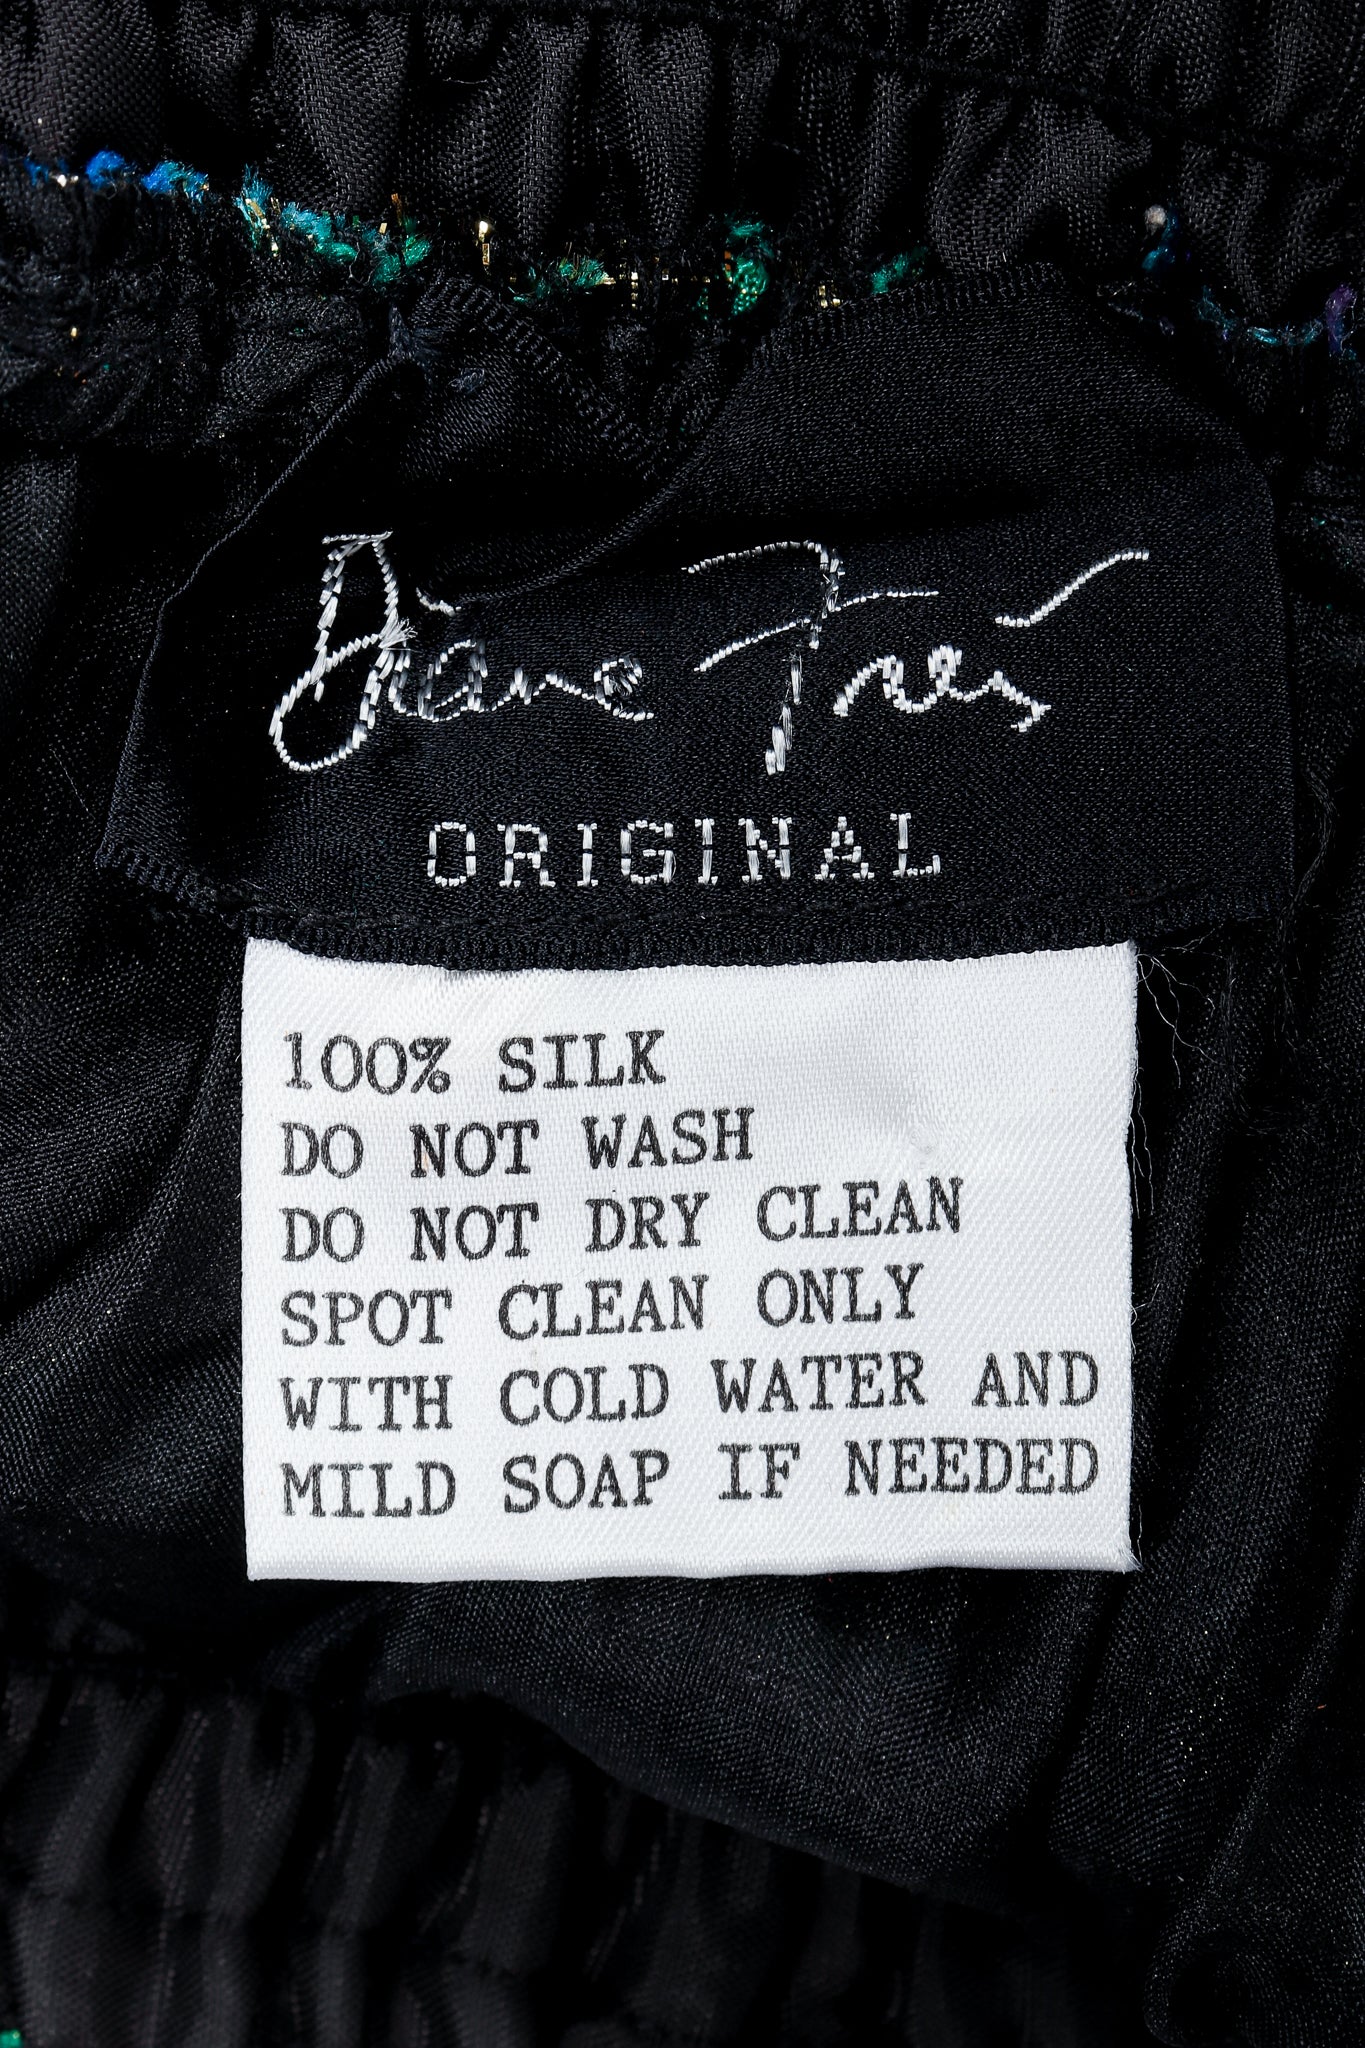 Vintage Diane Freis label on black lining fabric